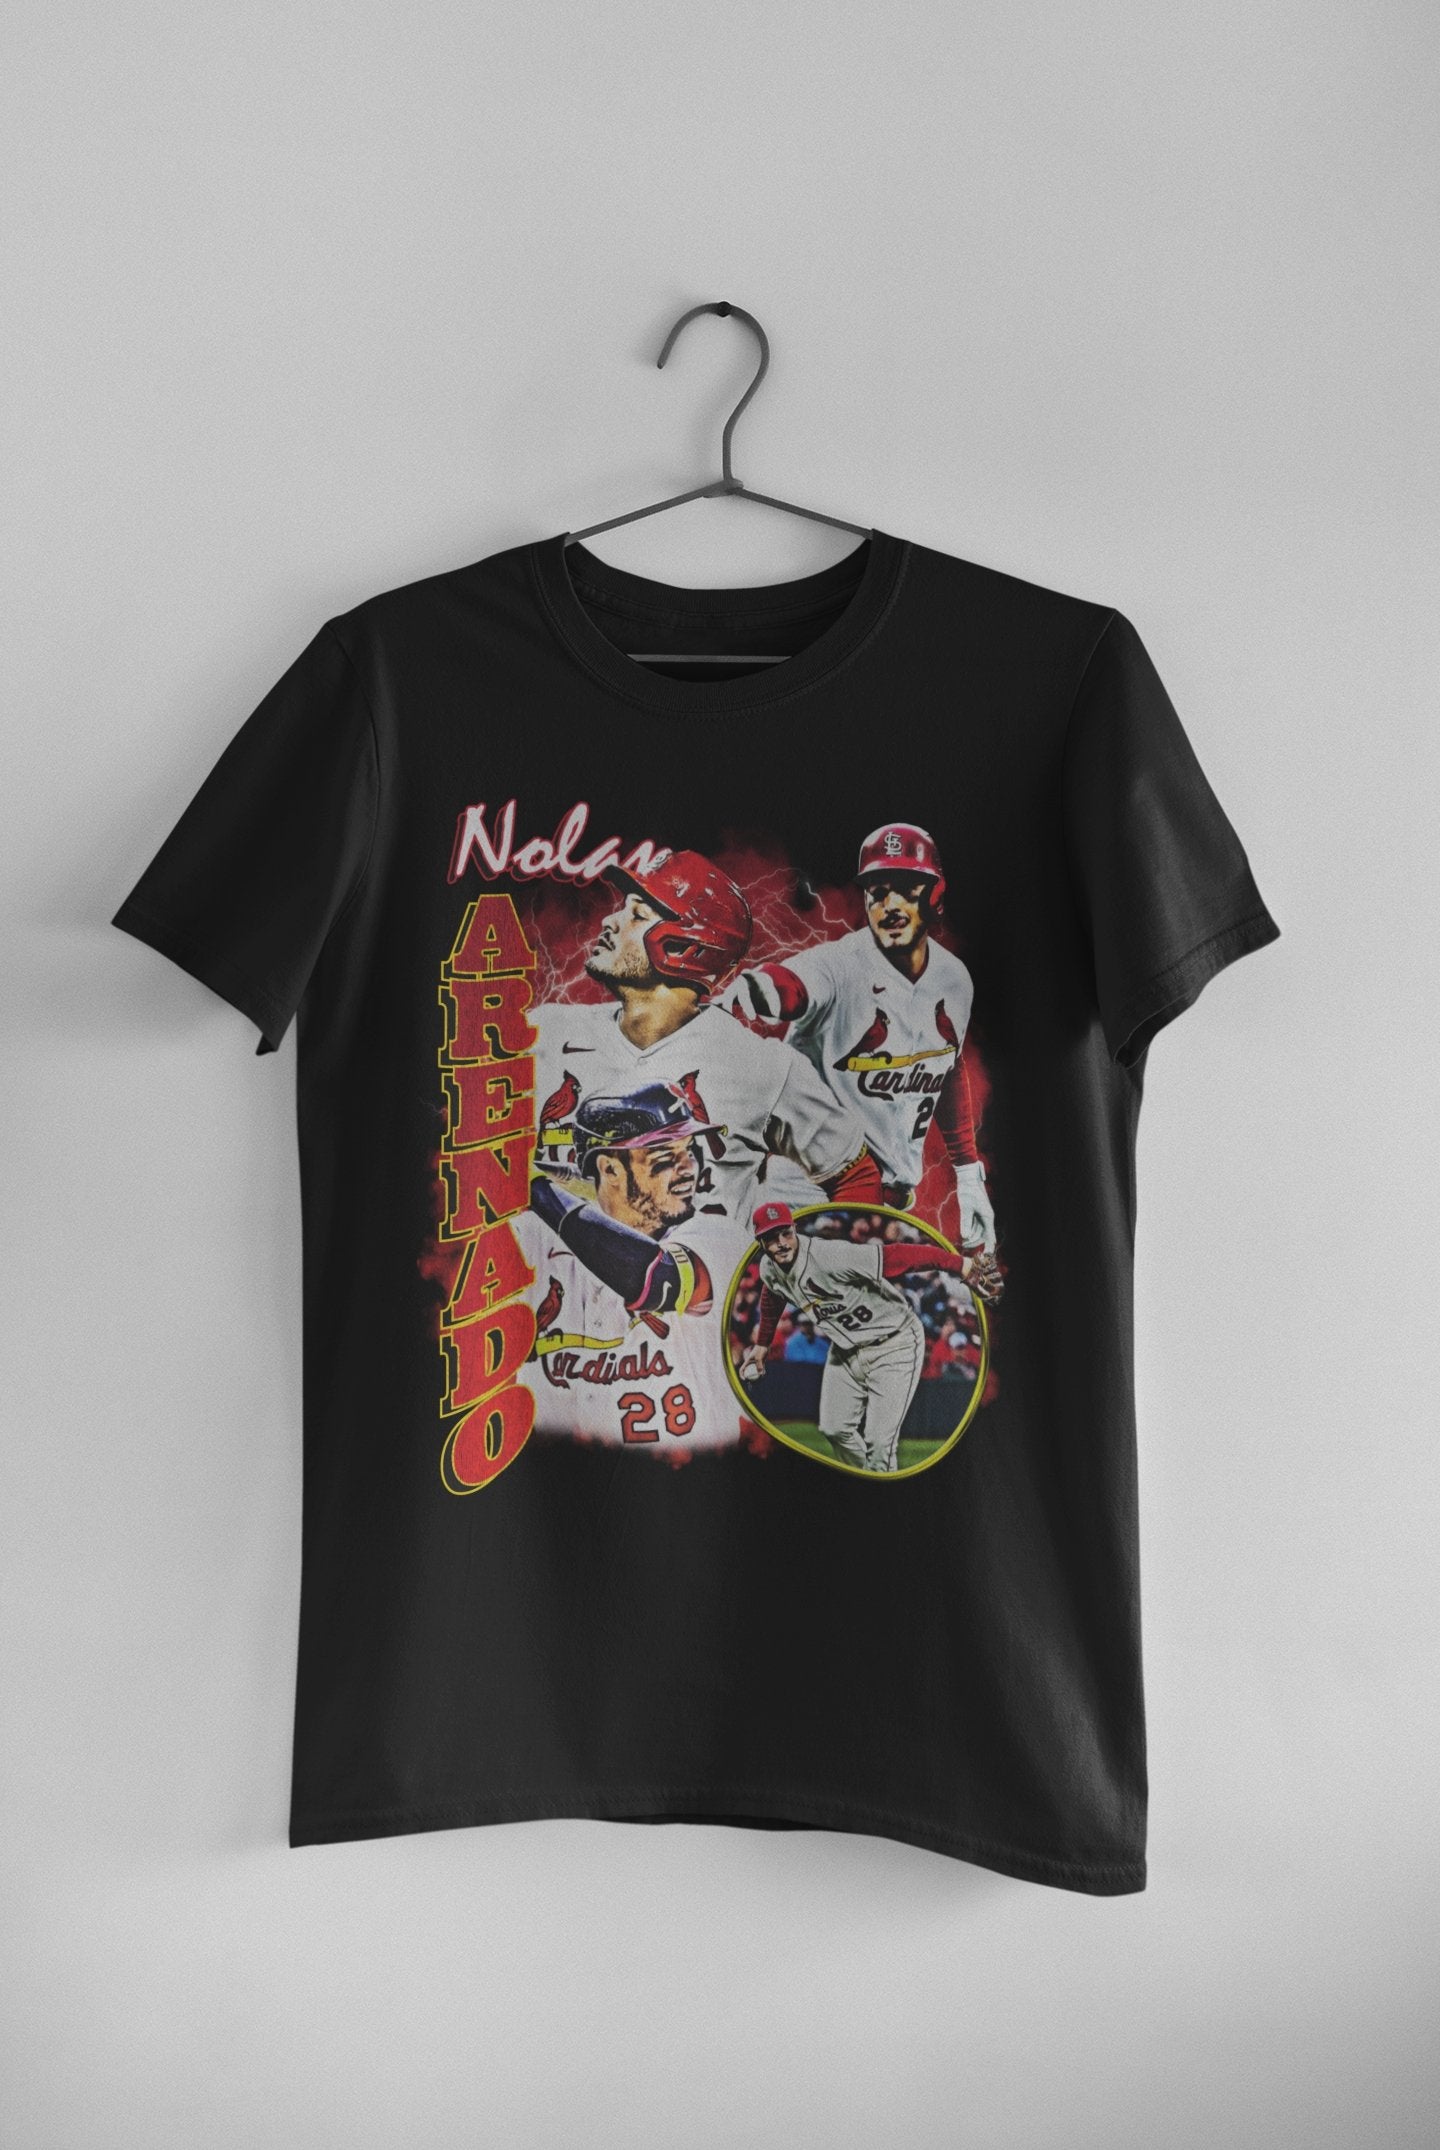 Nolan Arenado - Unisex t-shirt - Modern Vintage Apparel